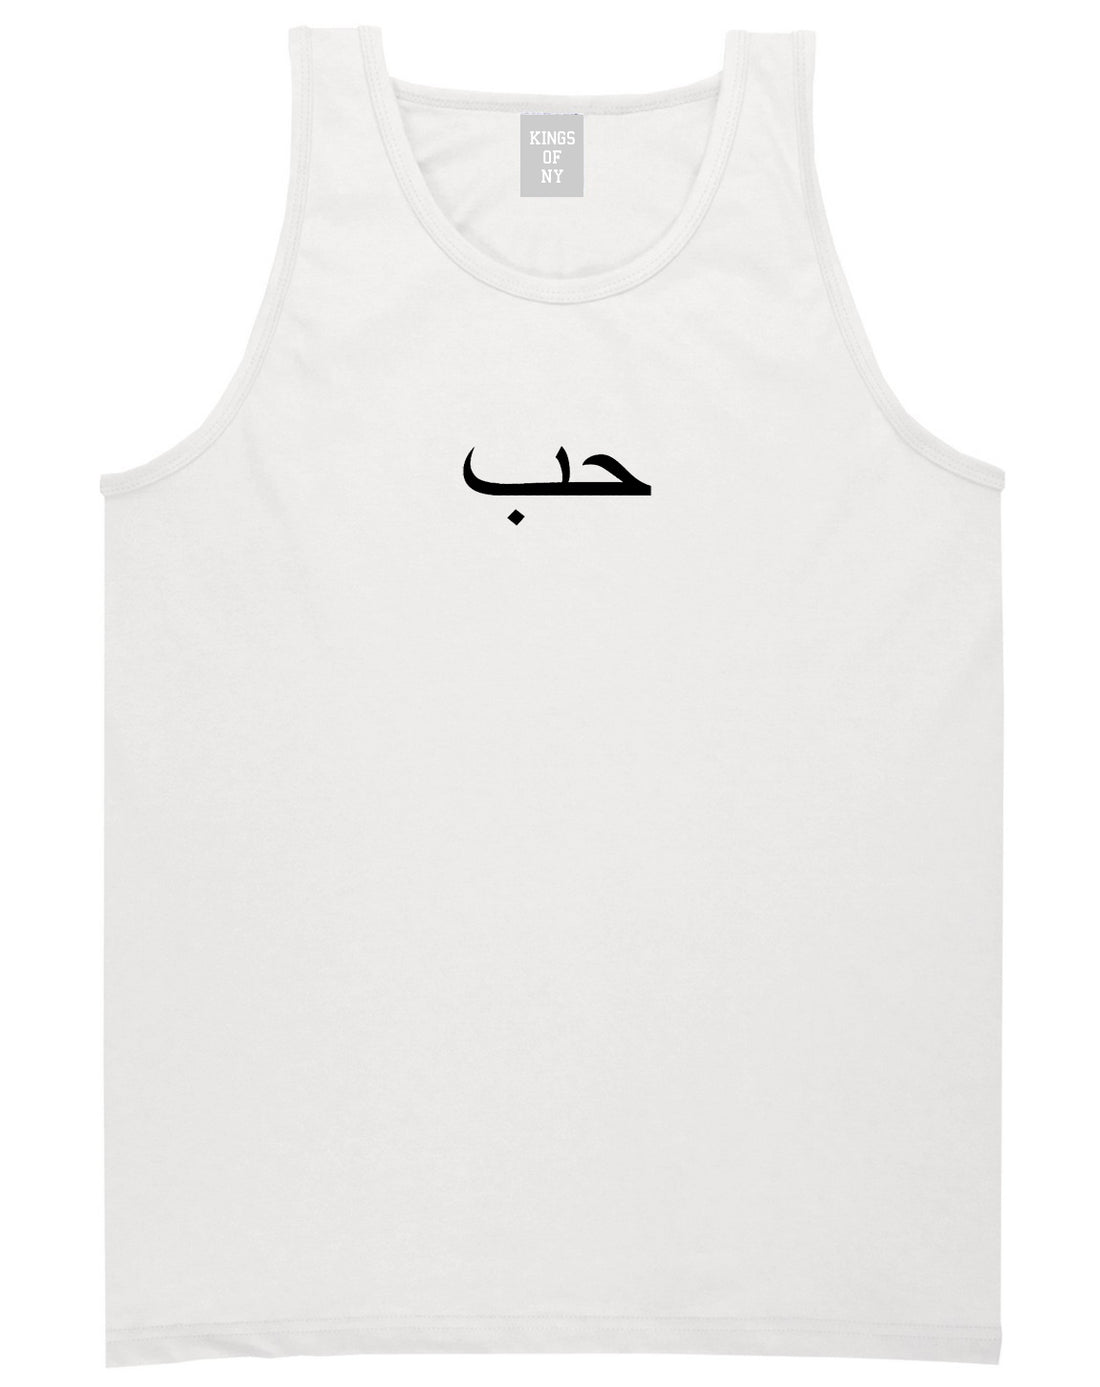 Arabic Love Mens Tank Top Shirt White by Kings Of NY